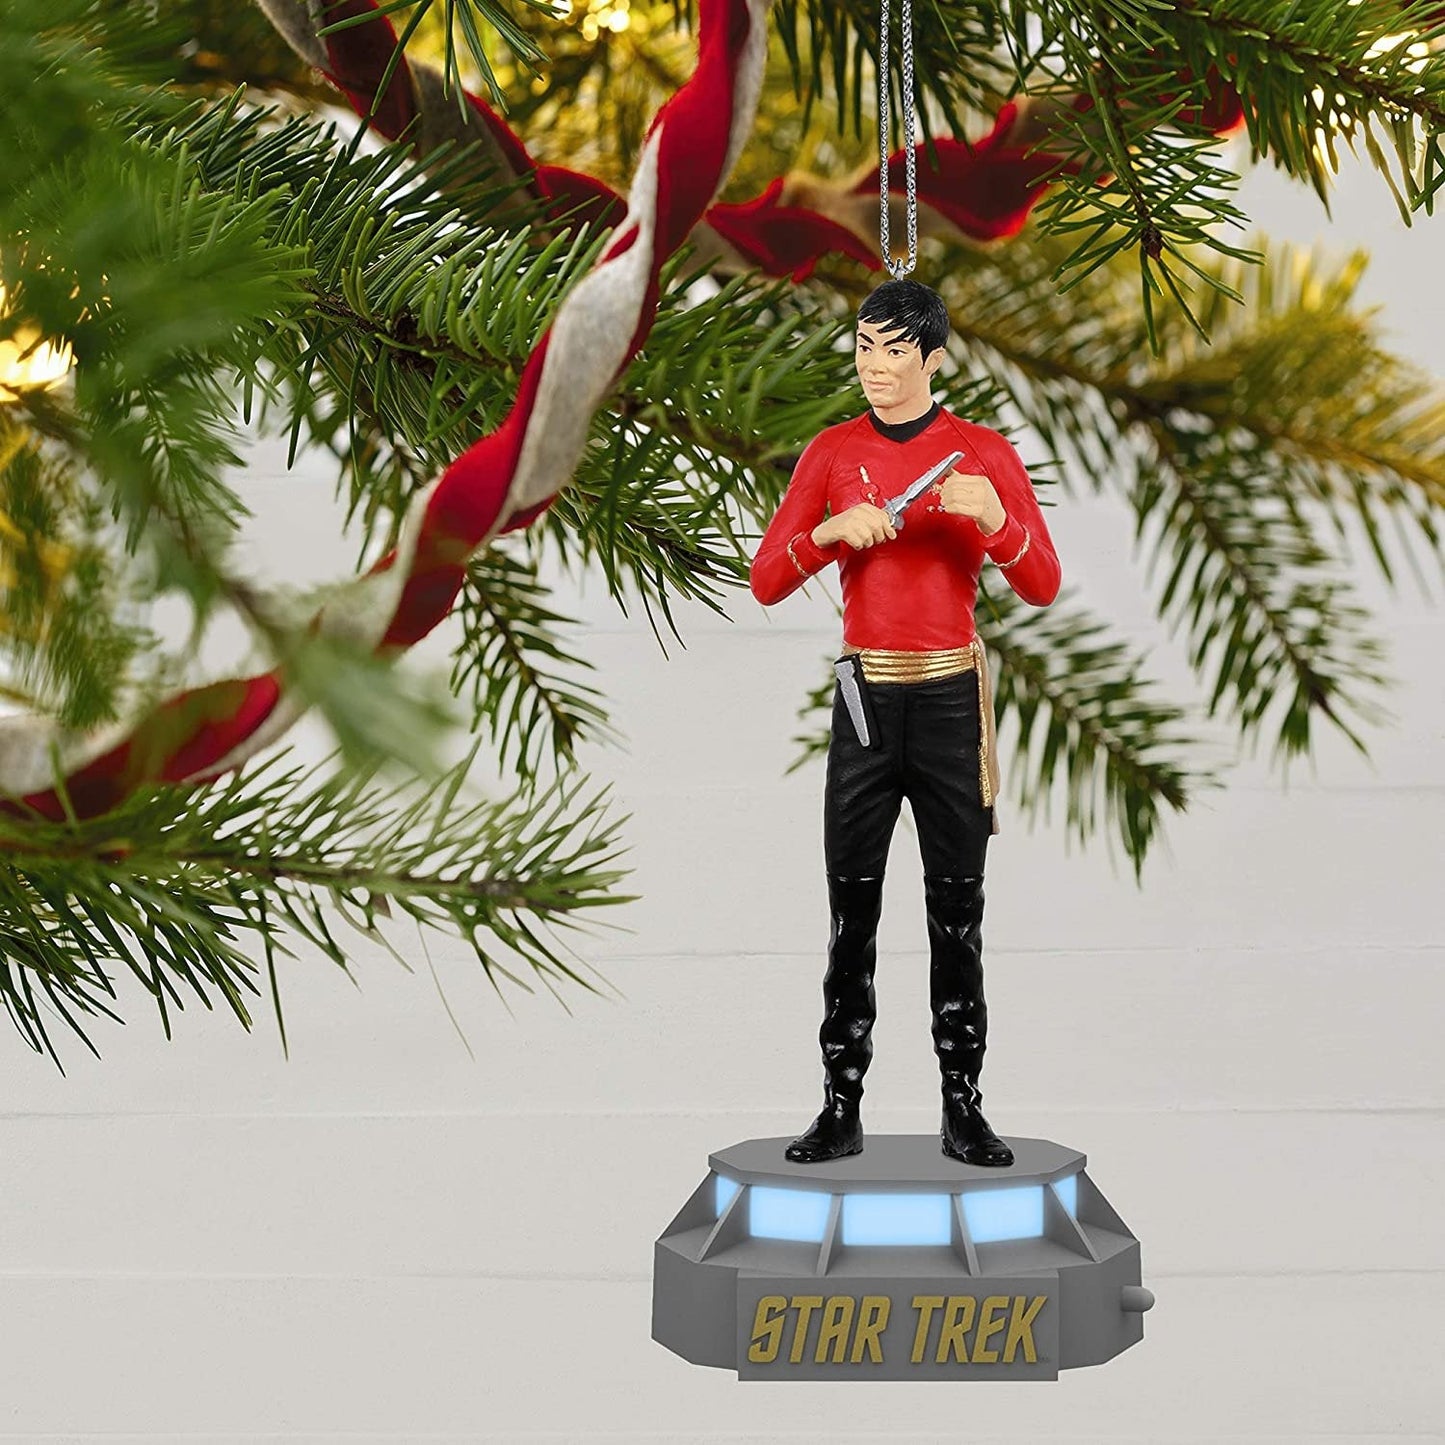 Hikaru Sulu, Star Trek Storytellers Collection Ornament, 2020 Hallmark Keepsake Light and Sound